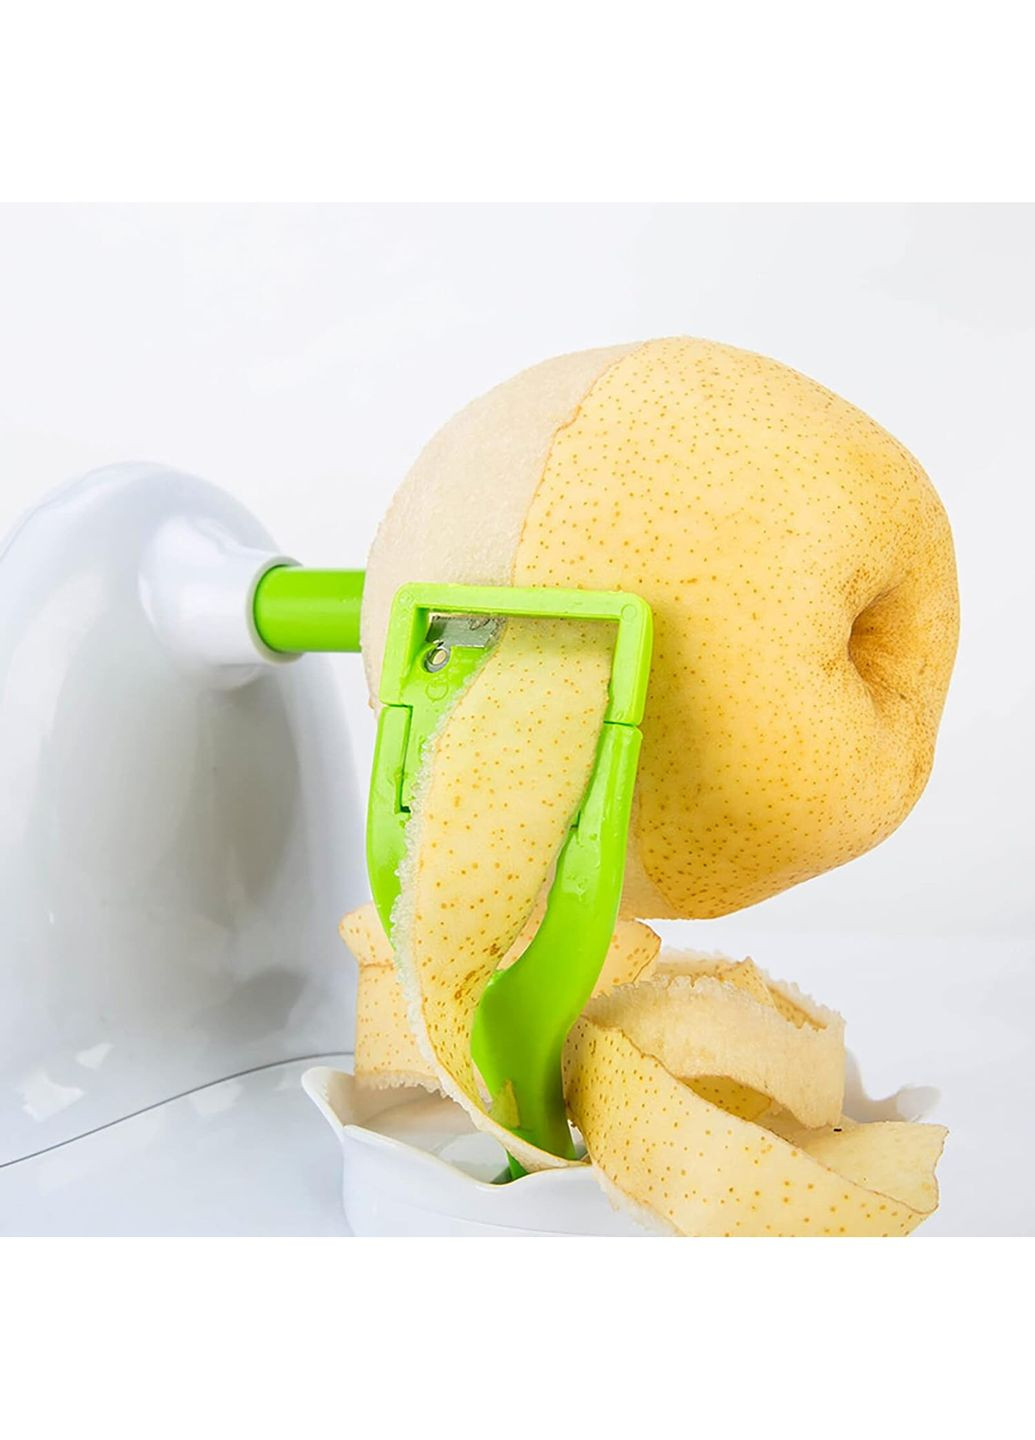 Яблокорезка + яблокочистка прибор для чистки и нарезки яблок Kitchen Master (263058621)